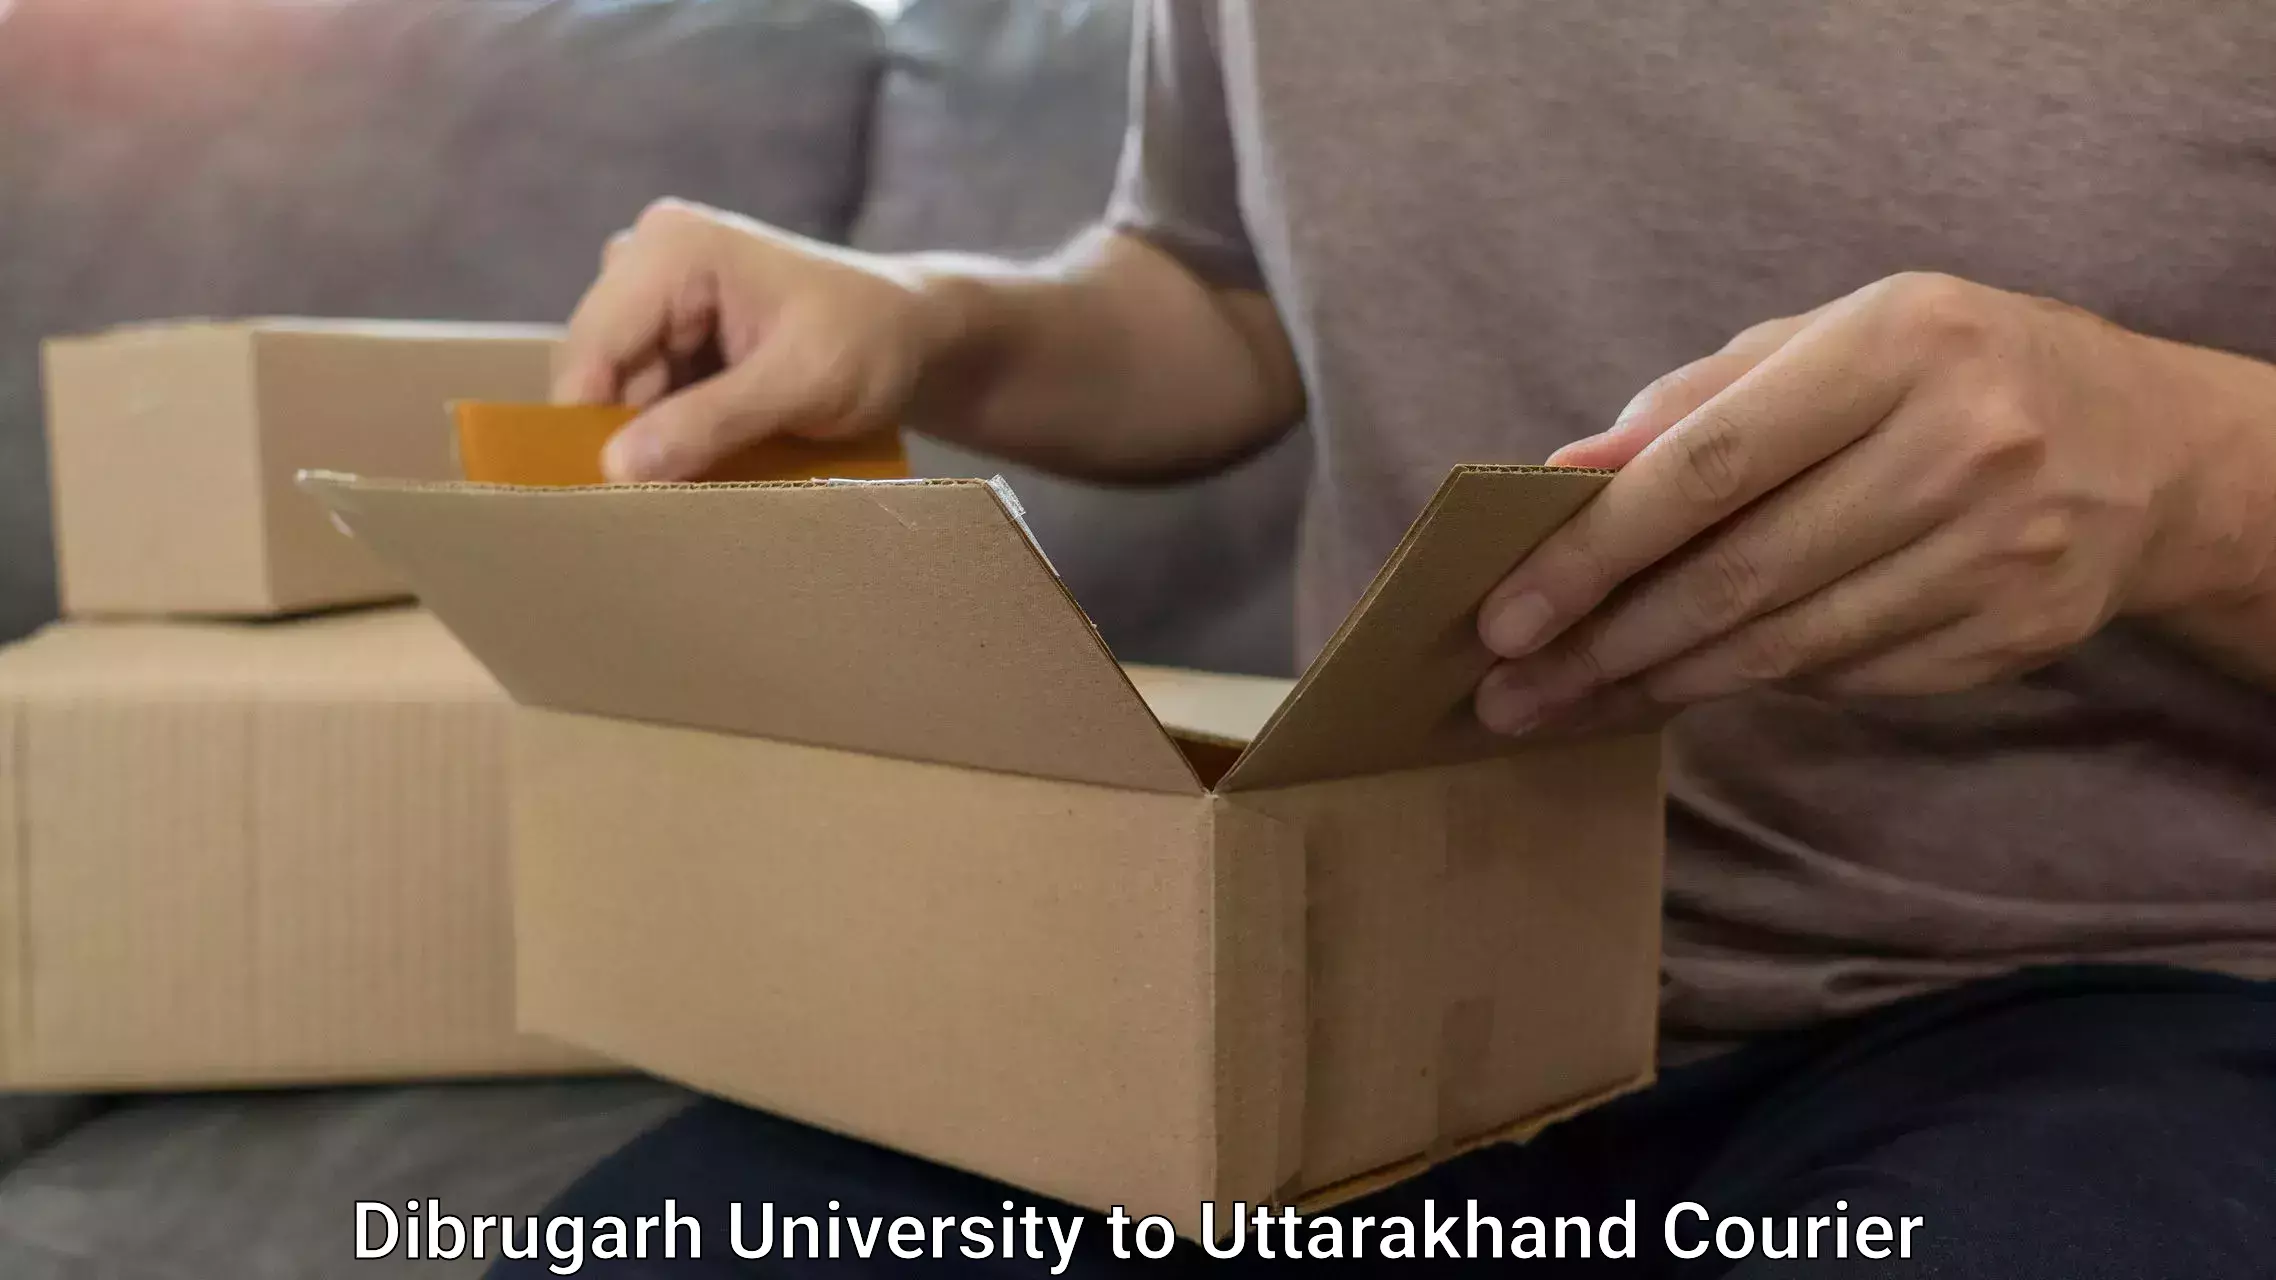 Luggage transport deals in Dibrugarh University to Rishikesh